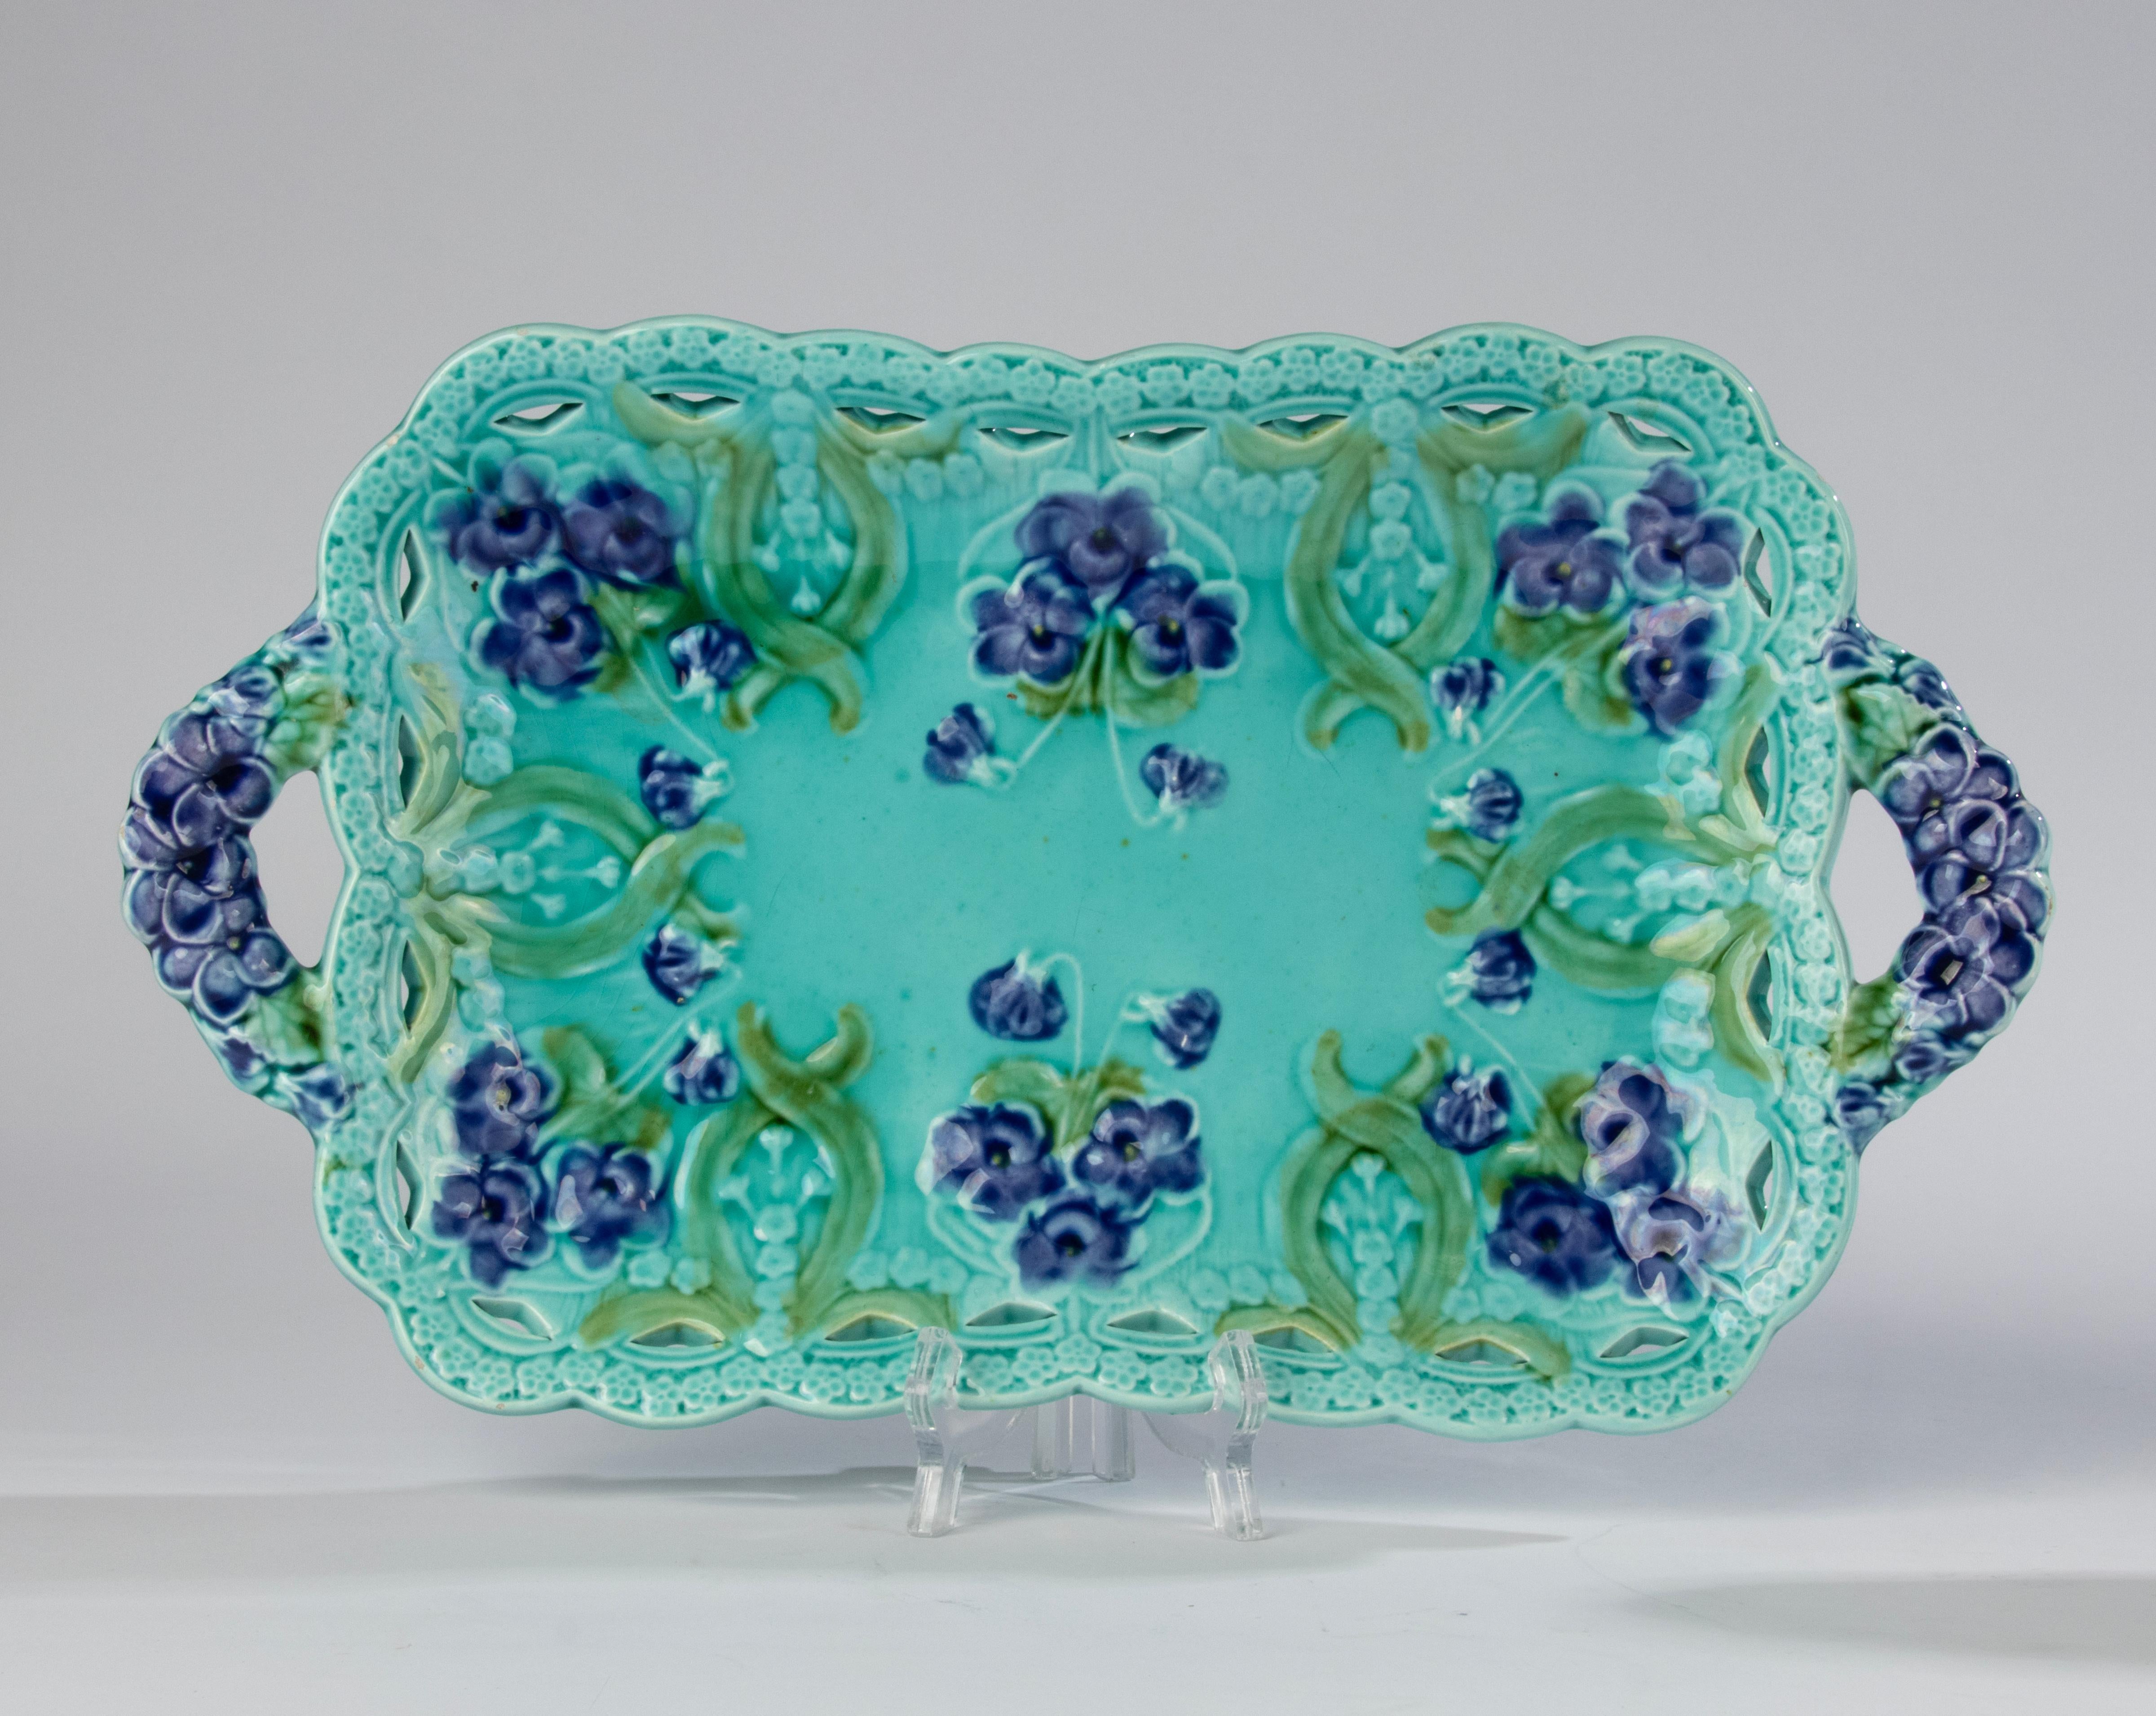 9-Piece Majolica Ceramic Cake Set - Villeroy & Boch - Art Nouveau  For Sale 1